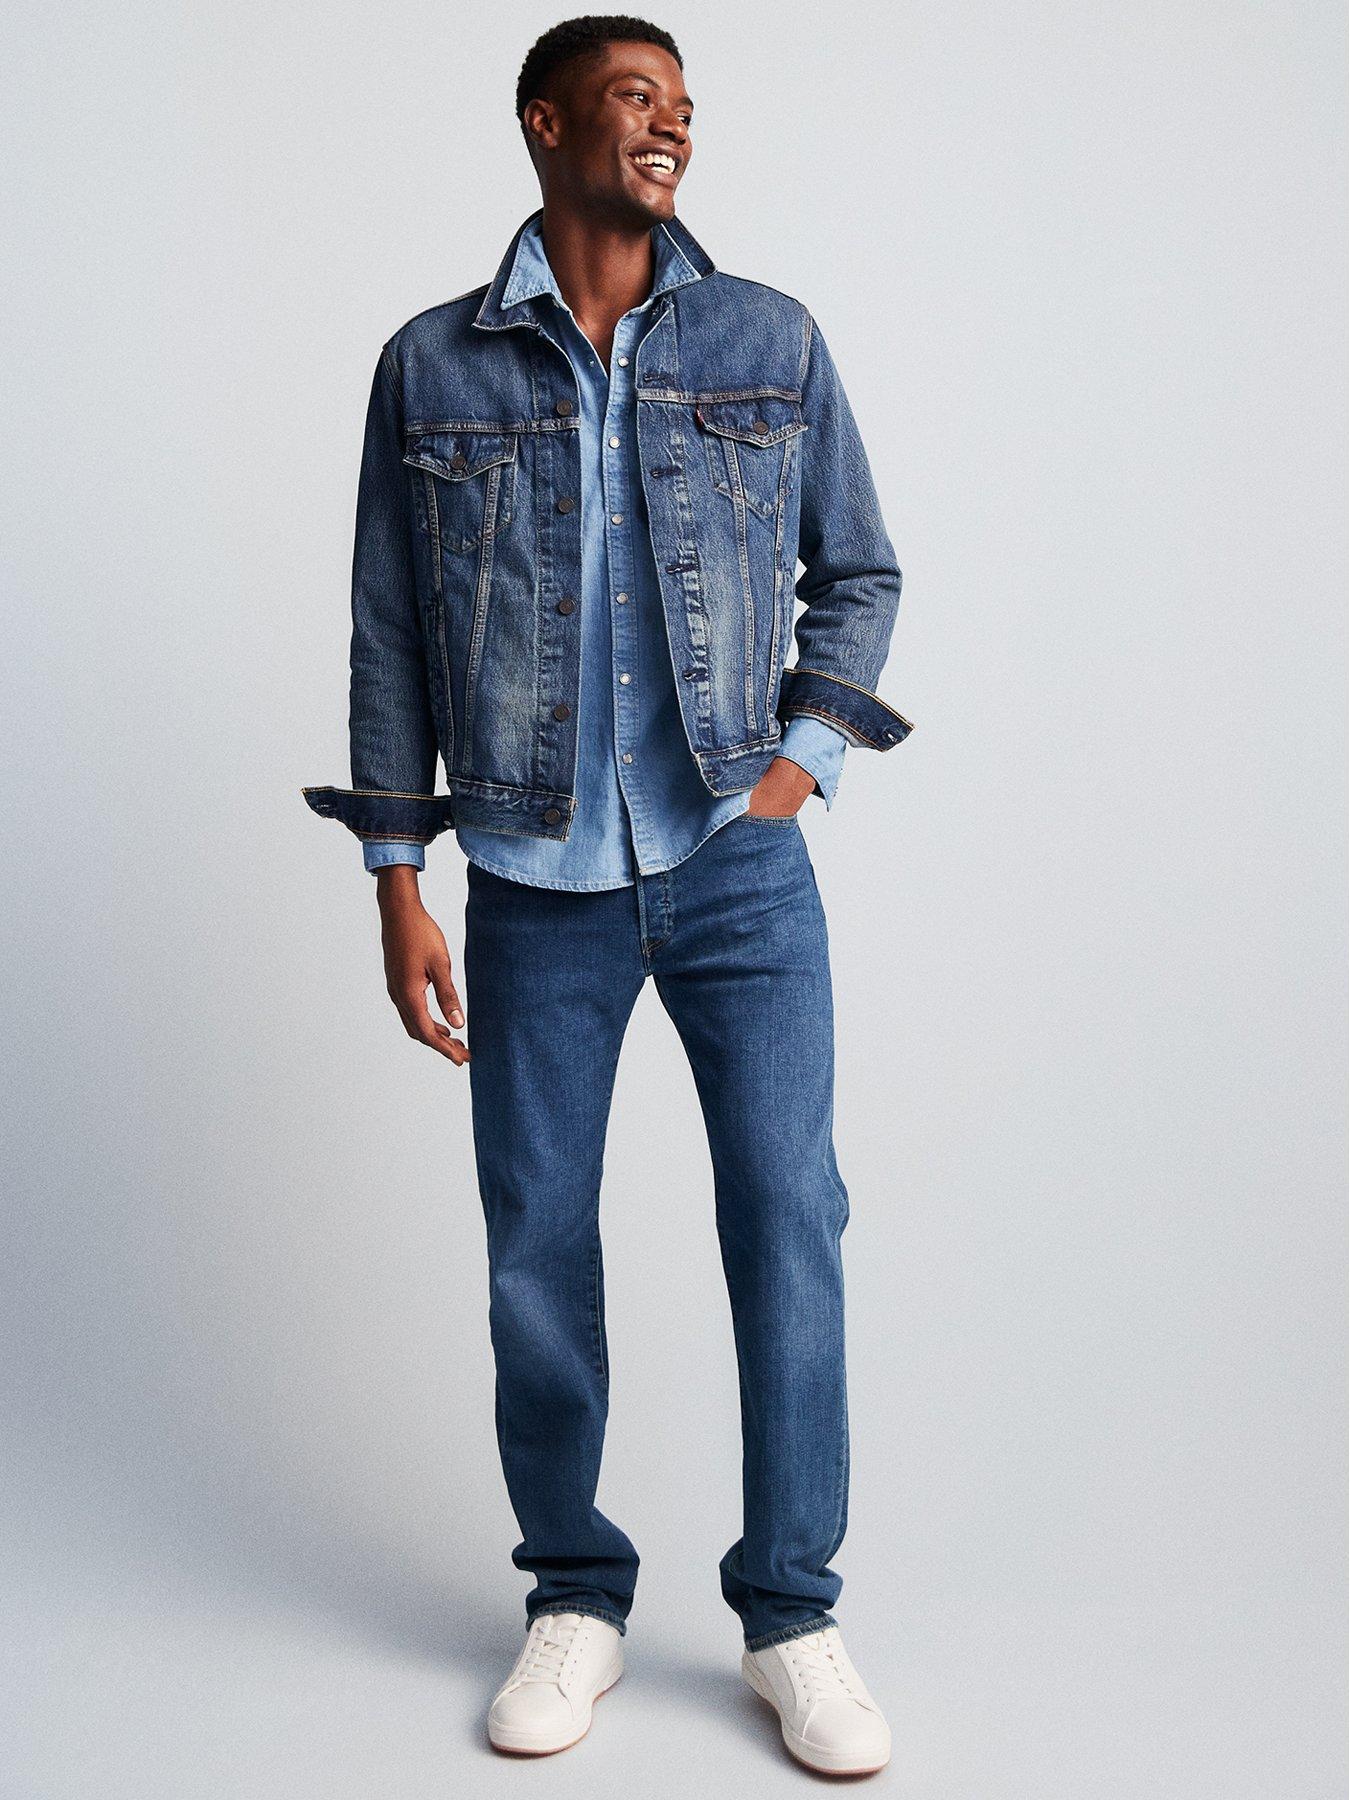 Levi's 501 Original Fit Jeans - Mid Wash | Very